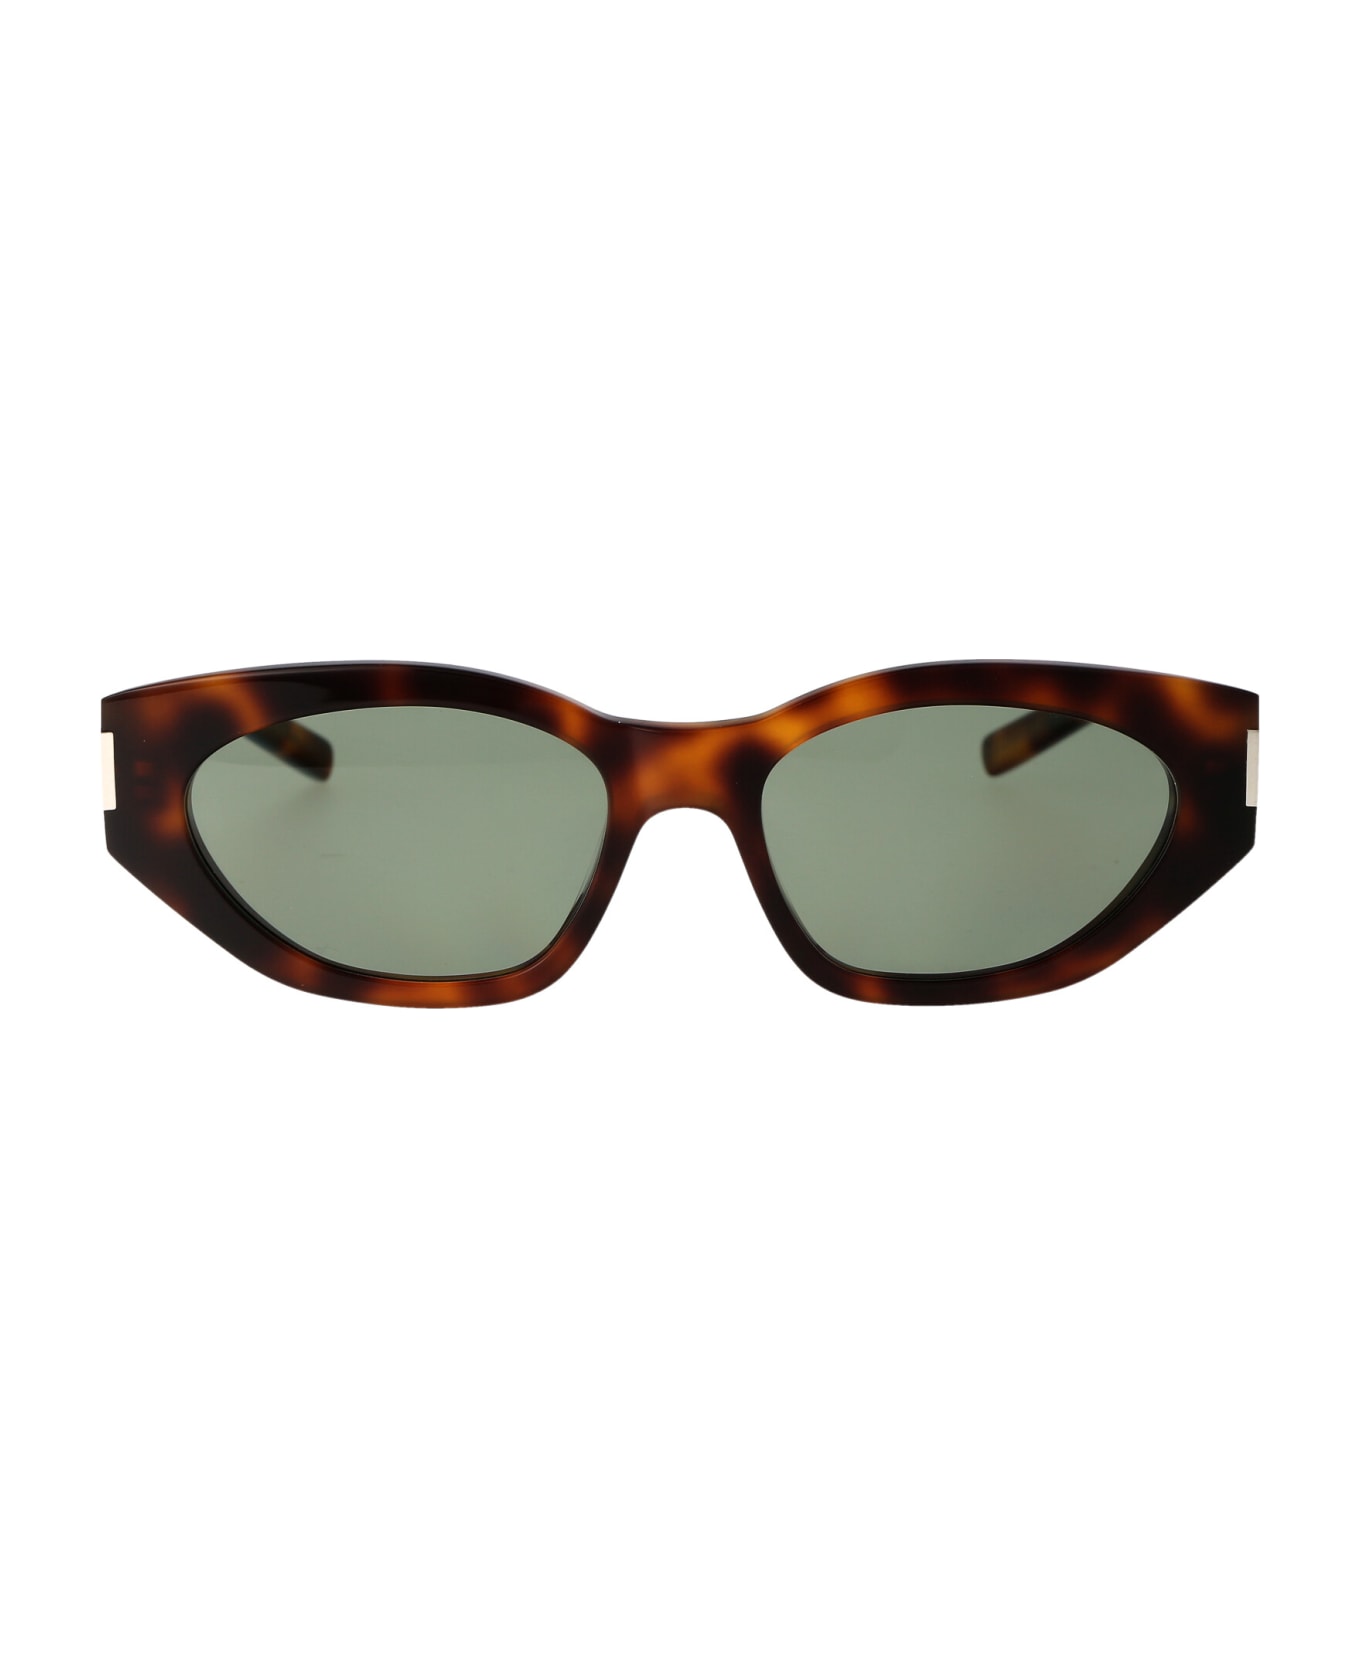 Saint Laurent Eyewear Sl 638 Sunglasses - 003 HAVANA HAVANA GREEN